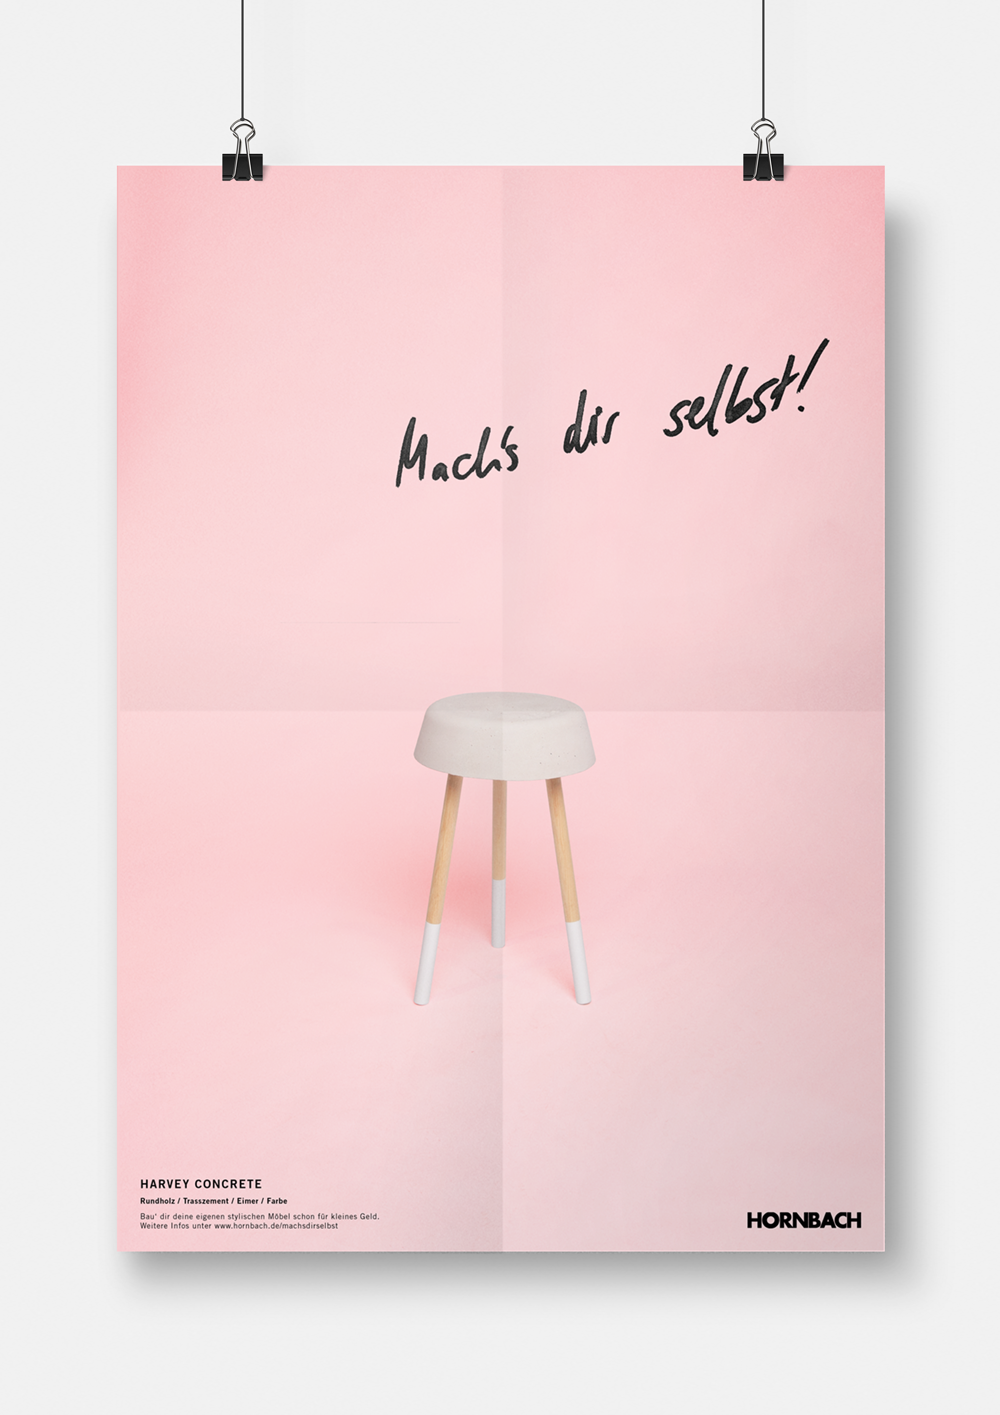 furniture graphic Baumarkt image advert campaign student studio photo Colourful 